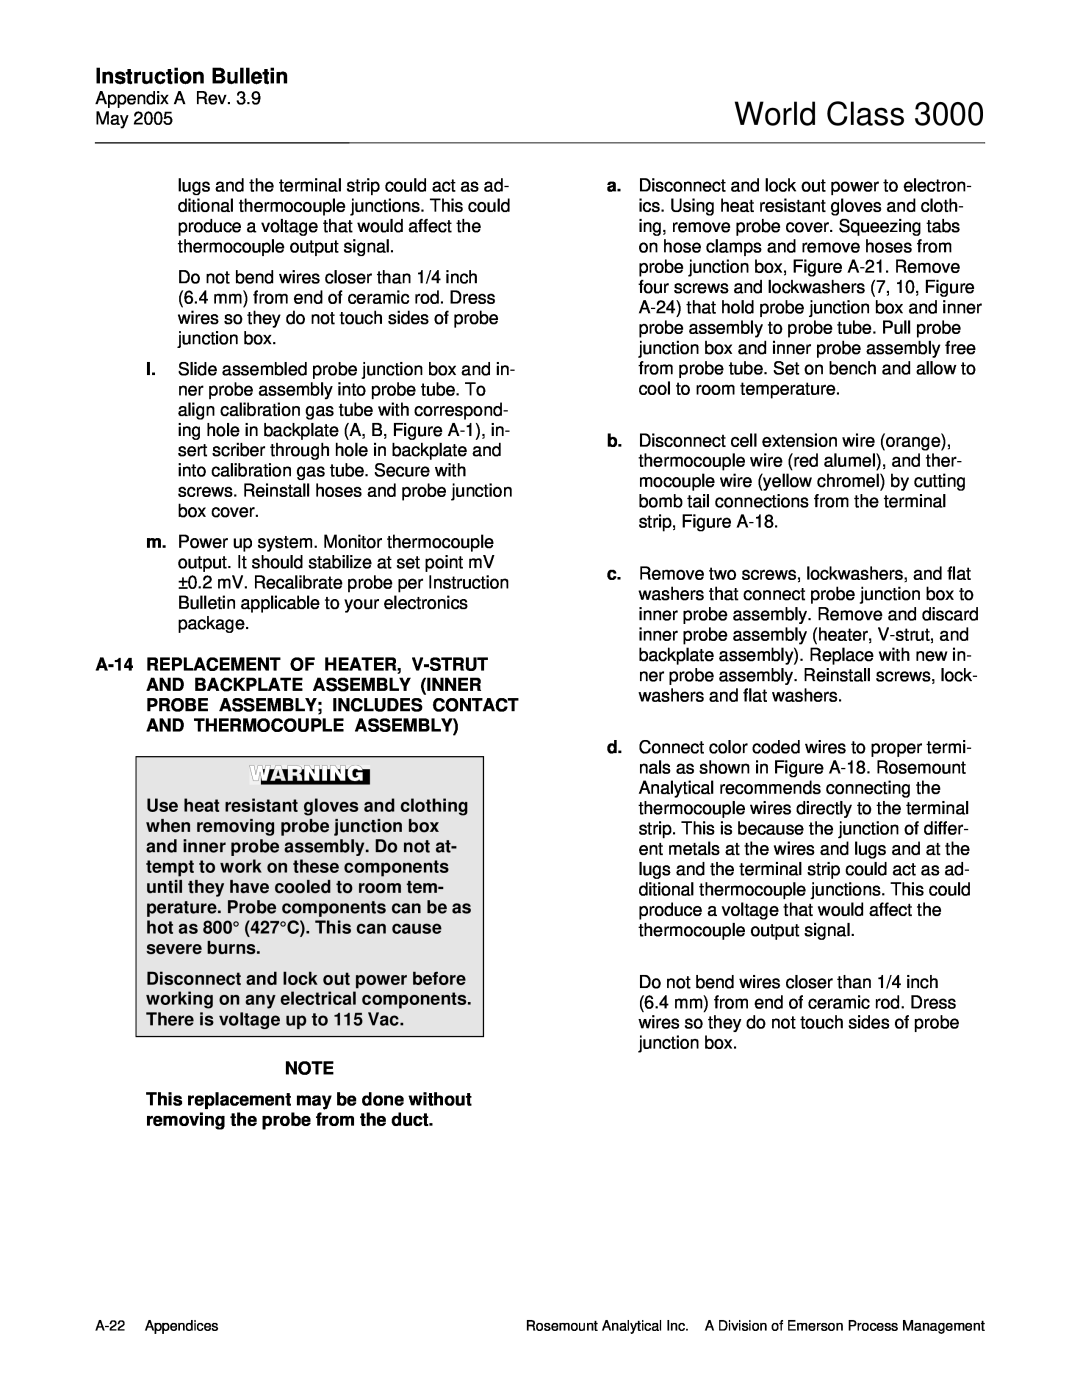 Emerson 3000 instruction manual World Class, Instruction Bulletin, Appendix A Rev. 3.9 May 